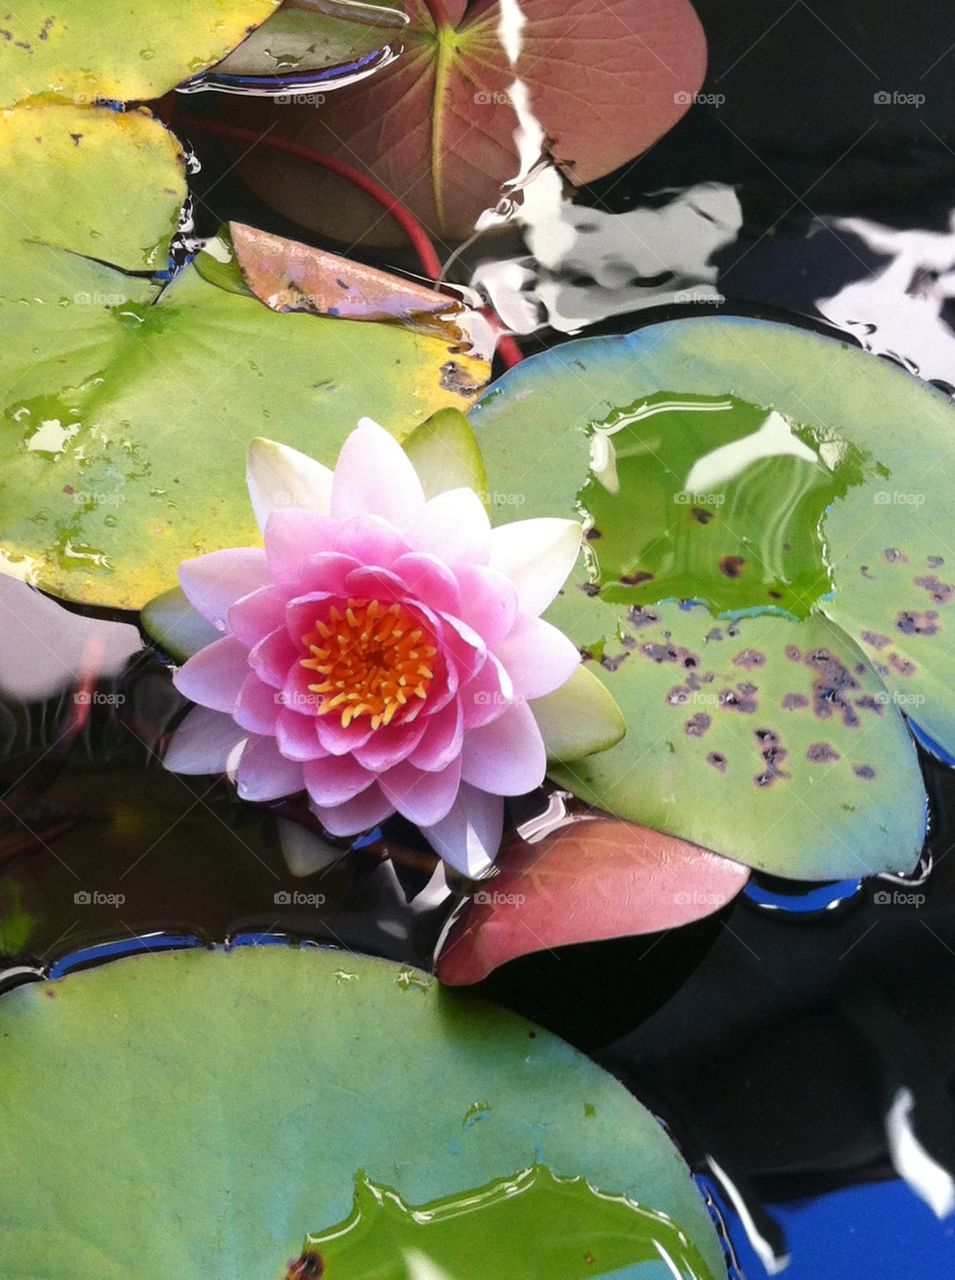 8/17/12. Pond lillies with pink flower @ Ala Moana Shopping Center Honolulu, Hawaii